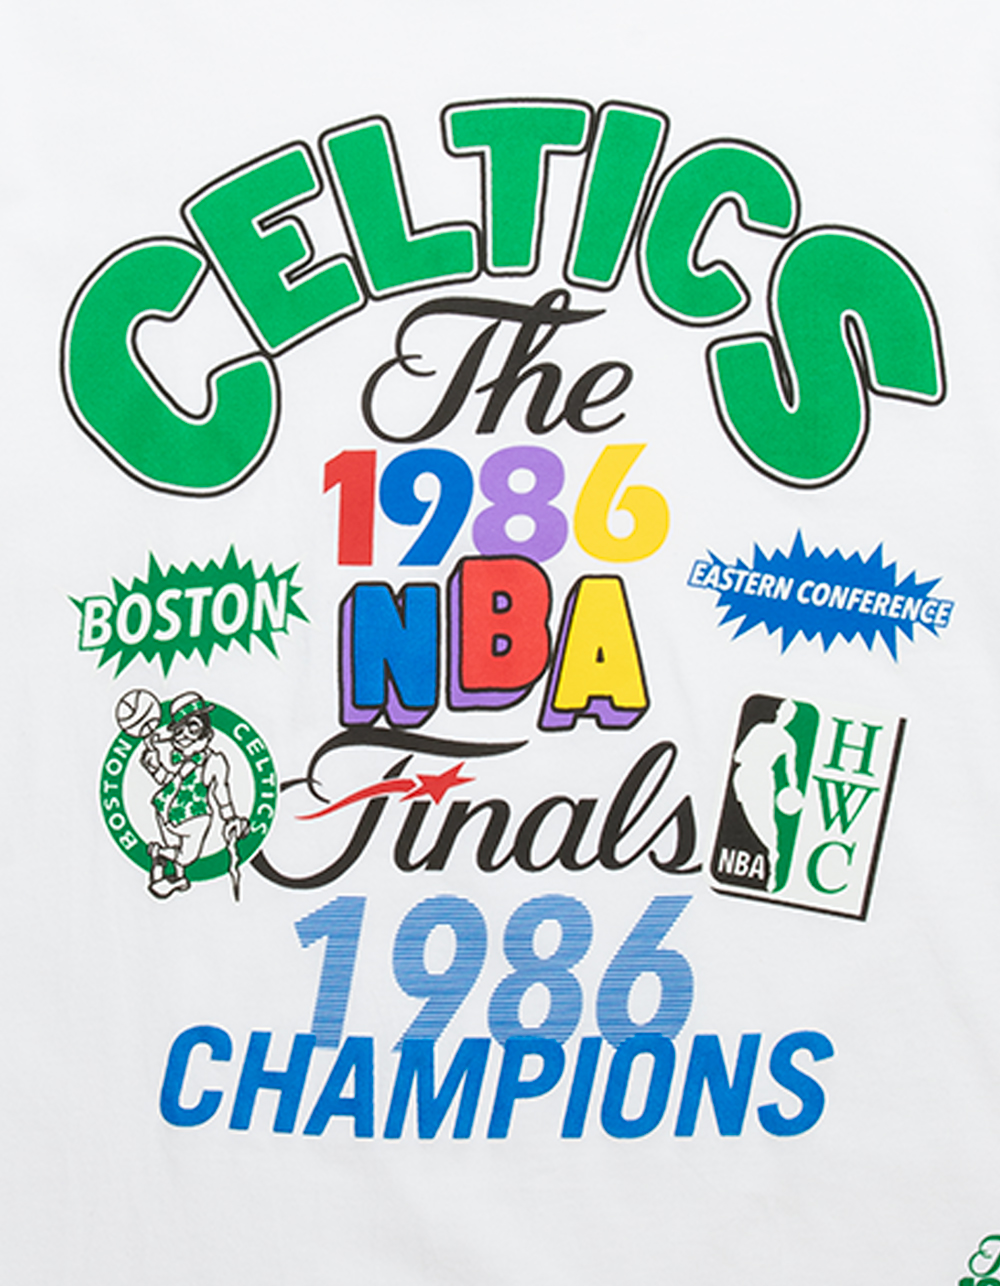 Mitchell & Ness NBA Boston Celtics champions t-shirt in black